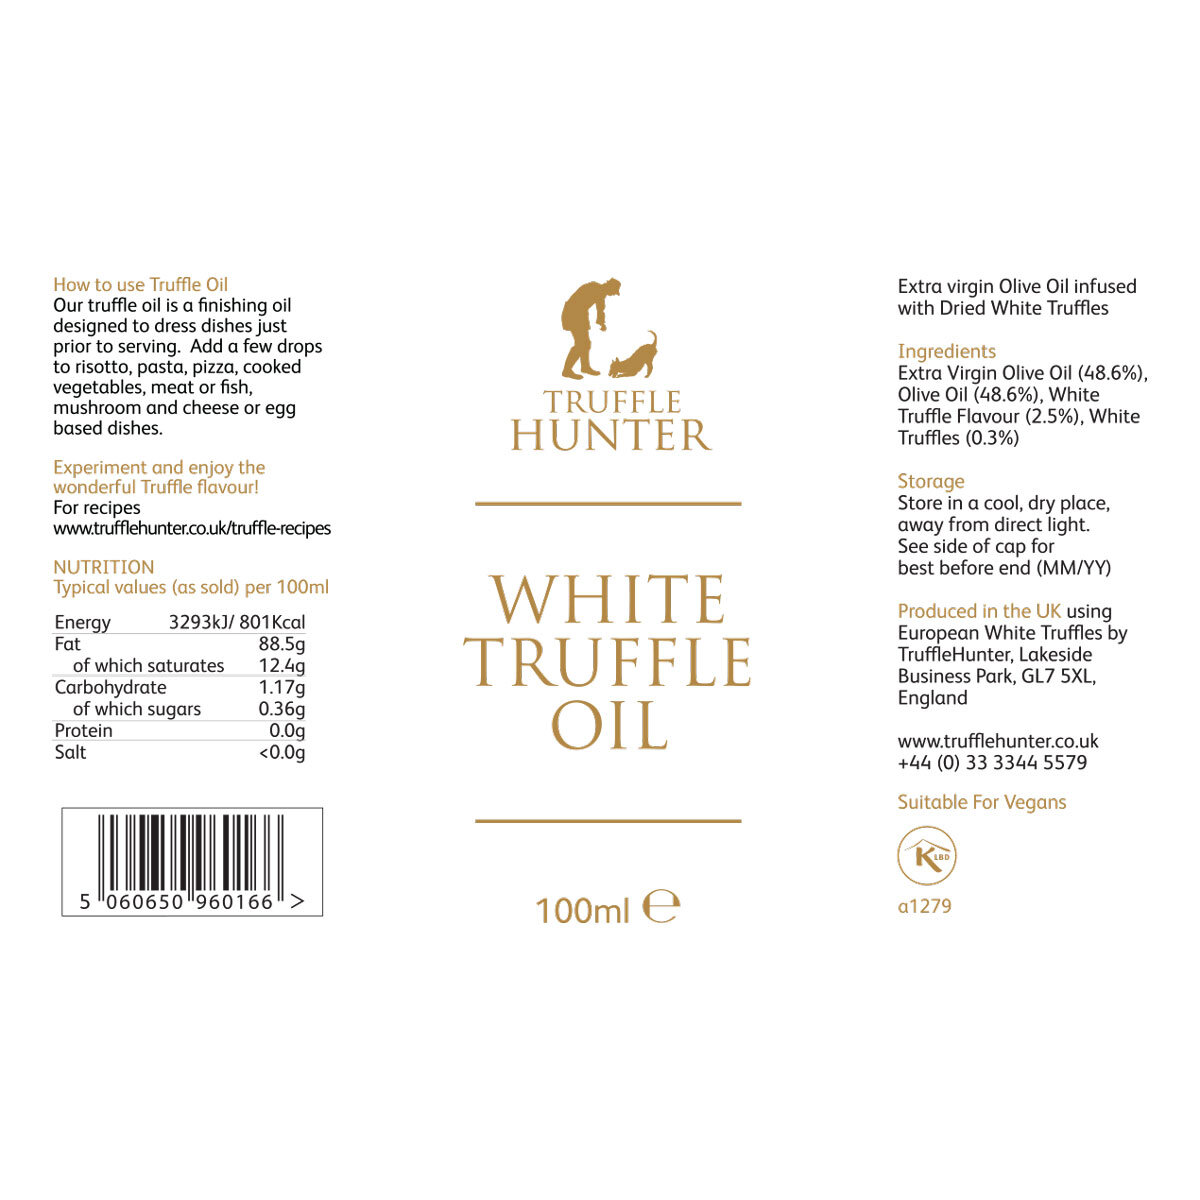 Truffle Hunter White Truffle Oil, 100ml Product Label